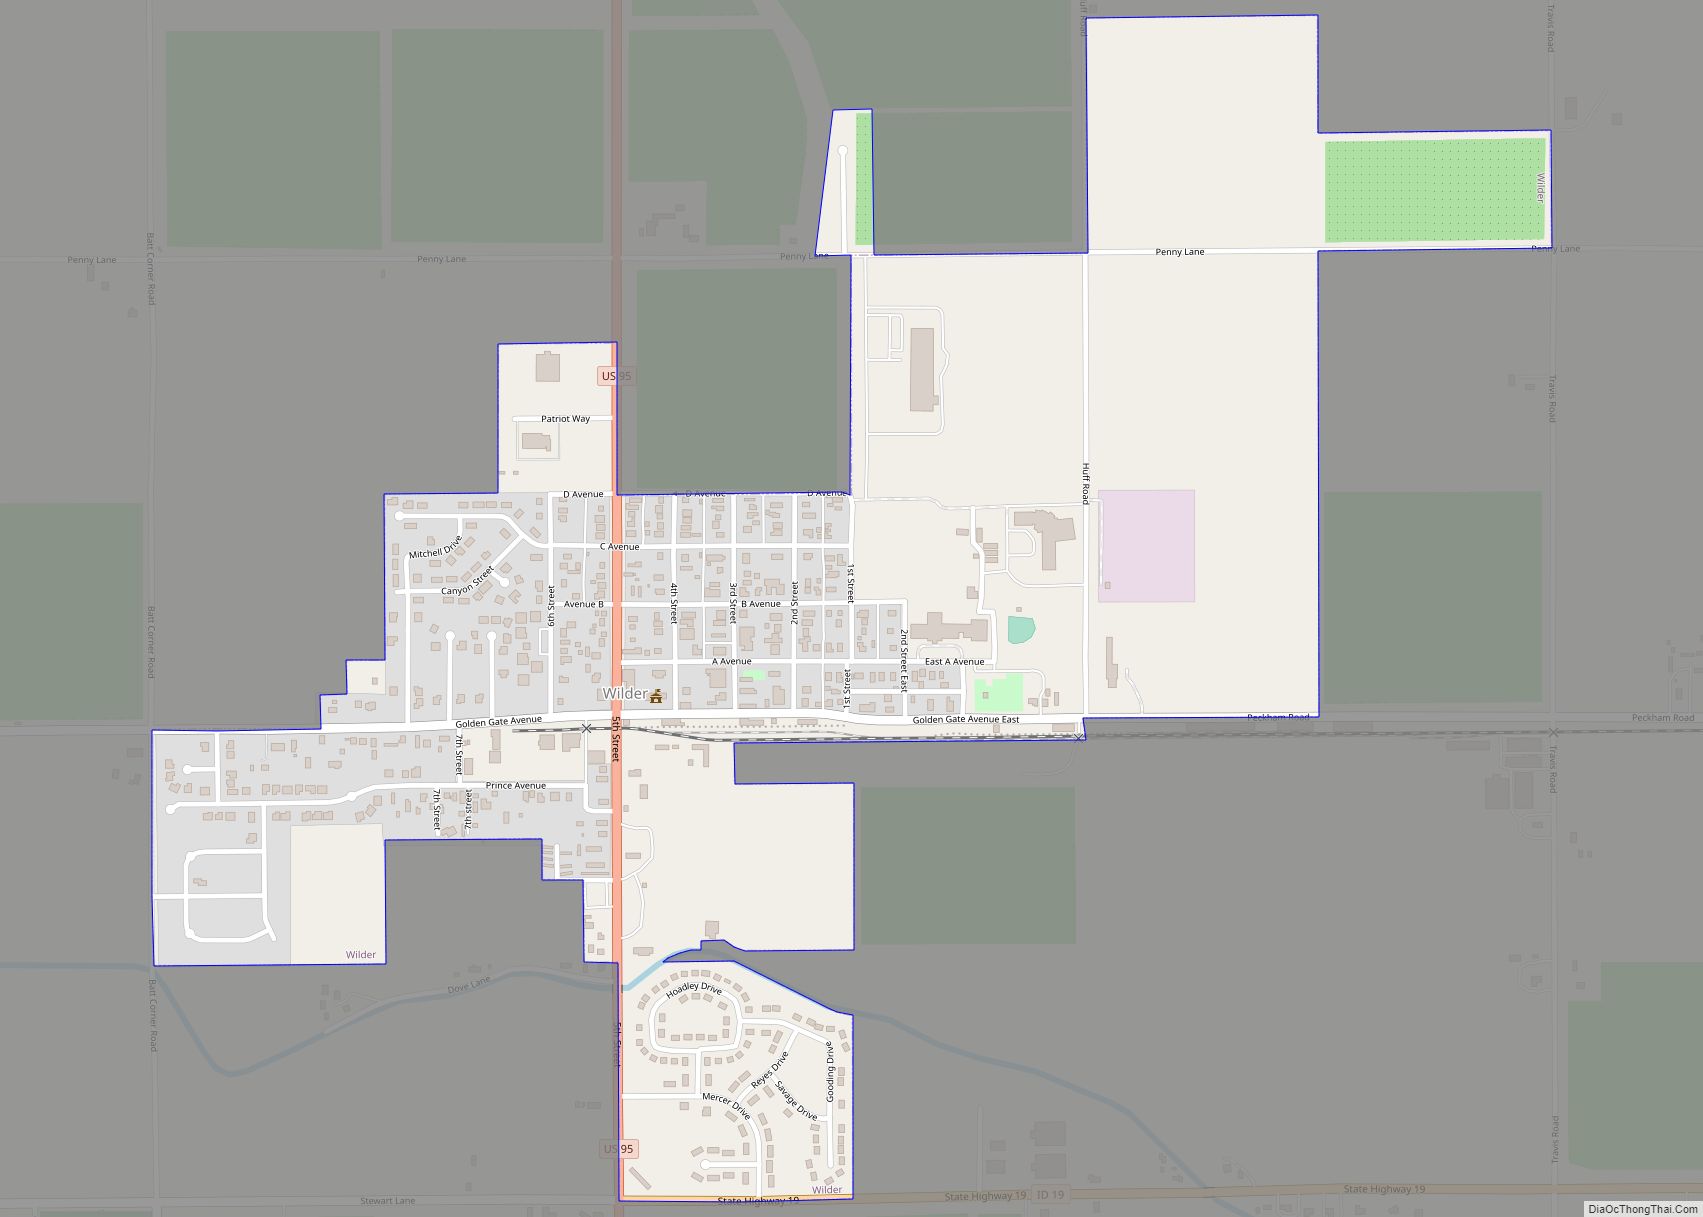 Map of Wilder city